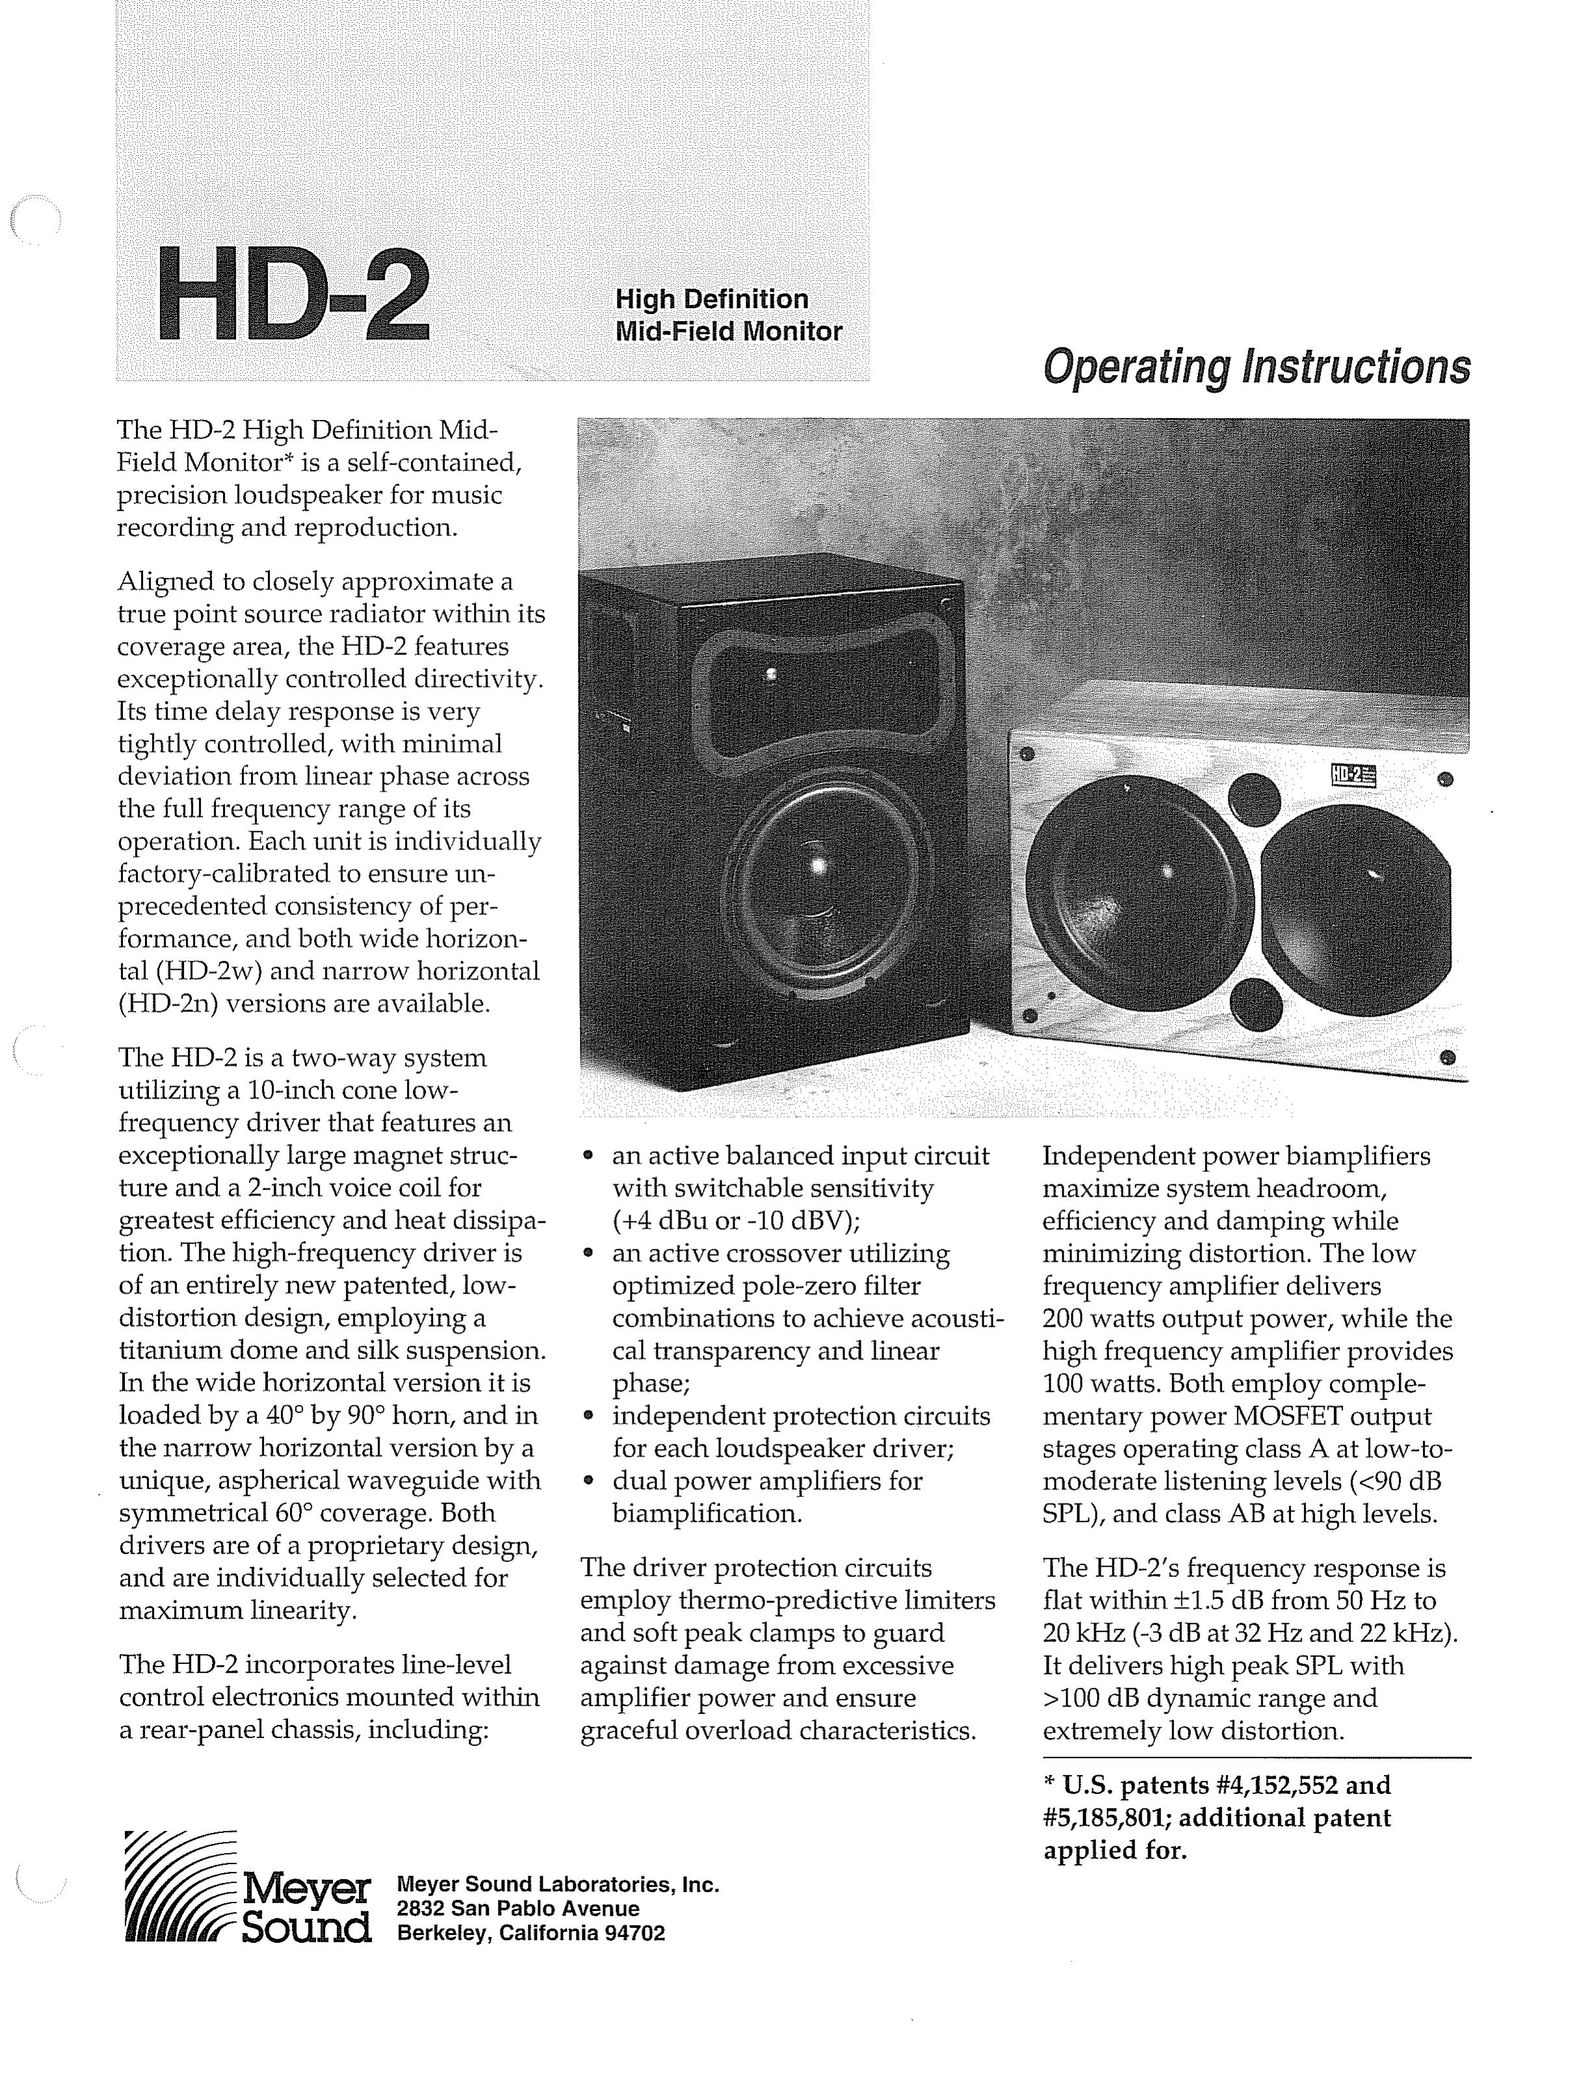 Meyer Sound HD-2 Car Speaker User Manual